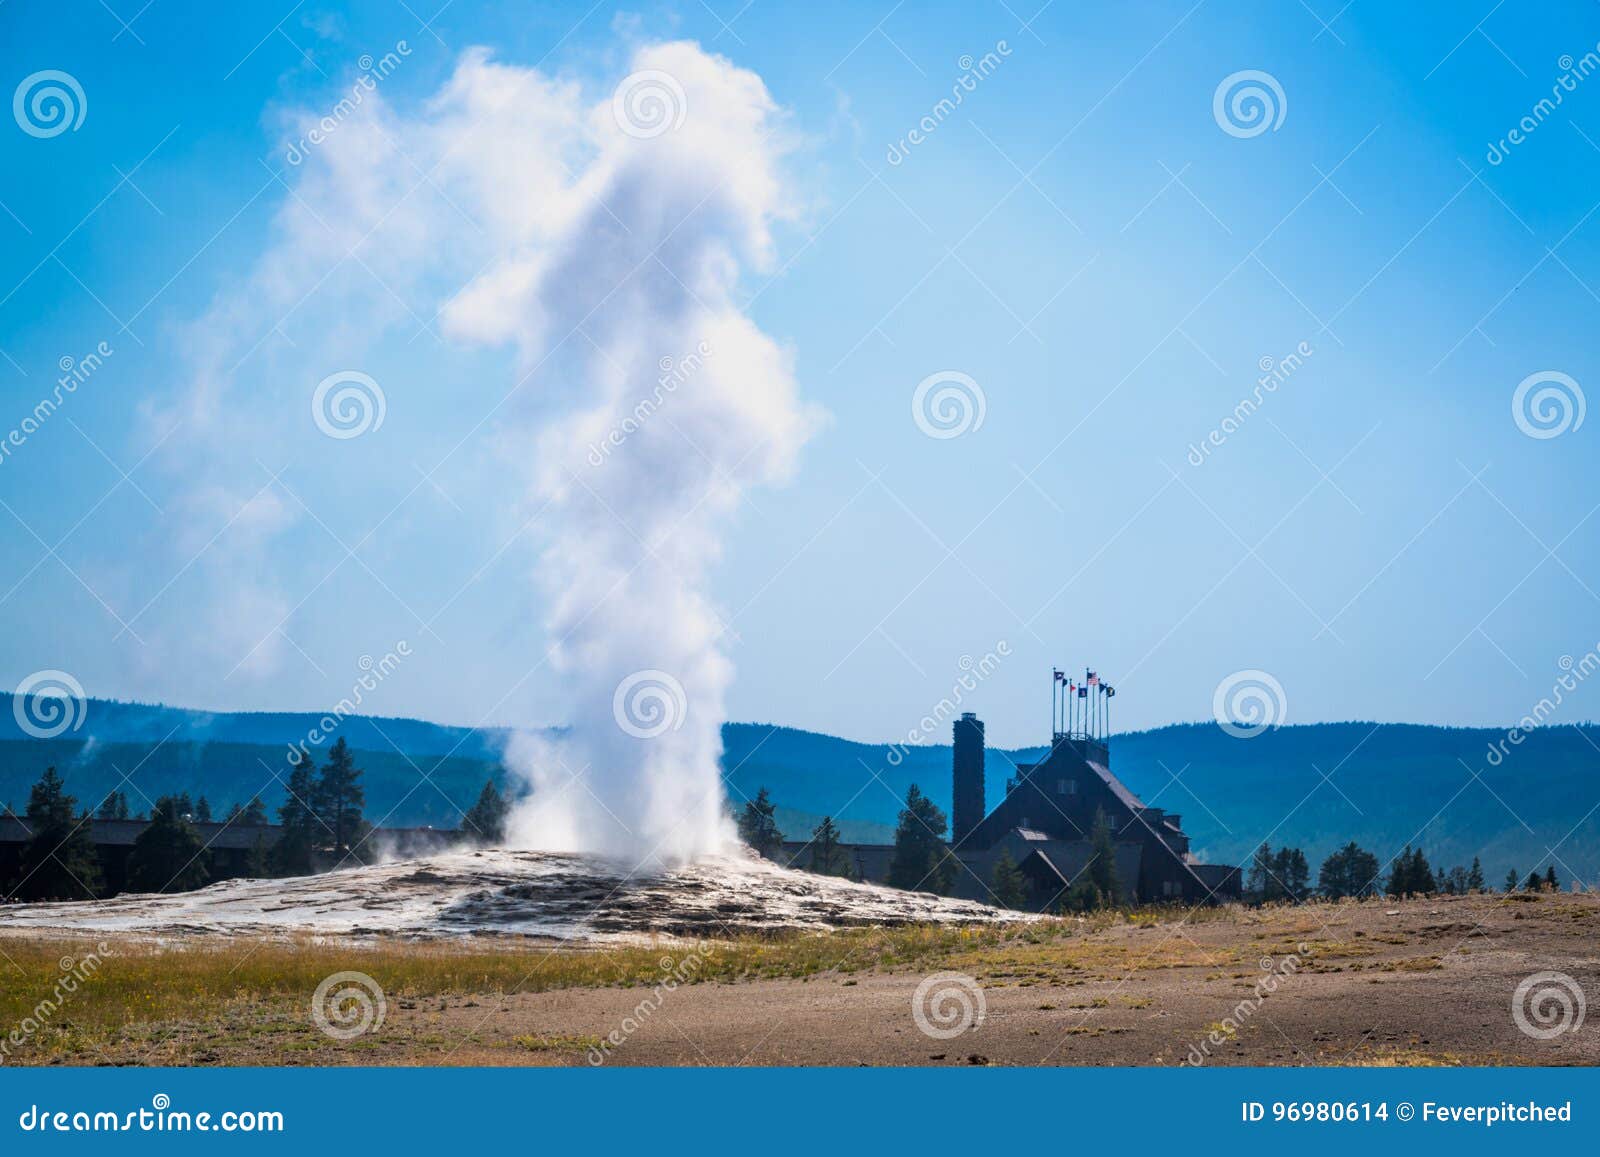 old faithful geyser erupting at yellowstone national park.